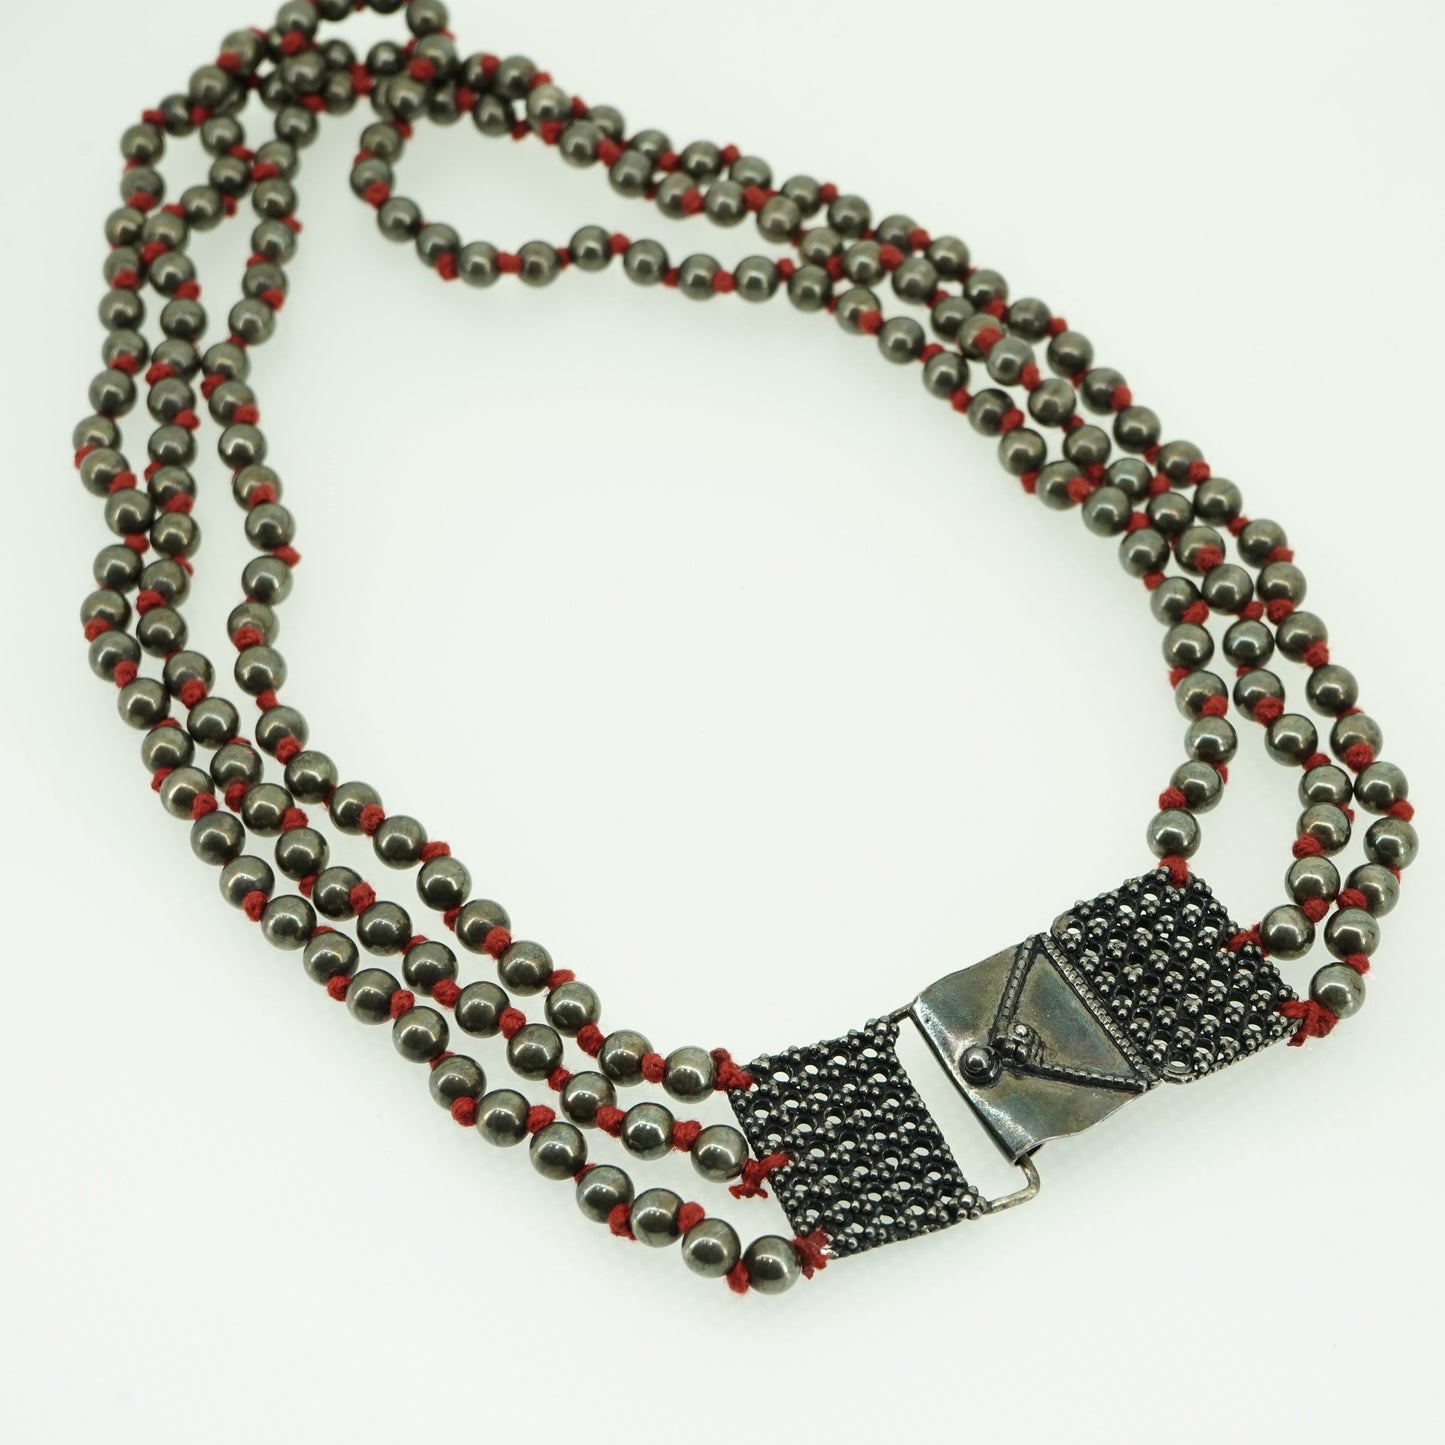 Three Layered Antique Design Necklace